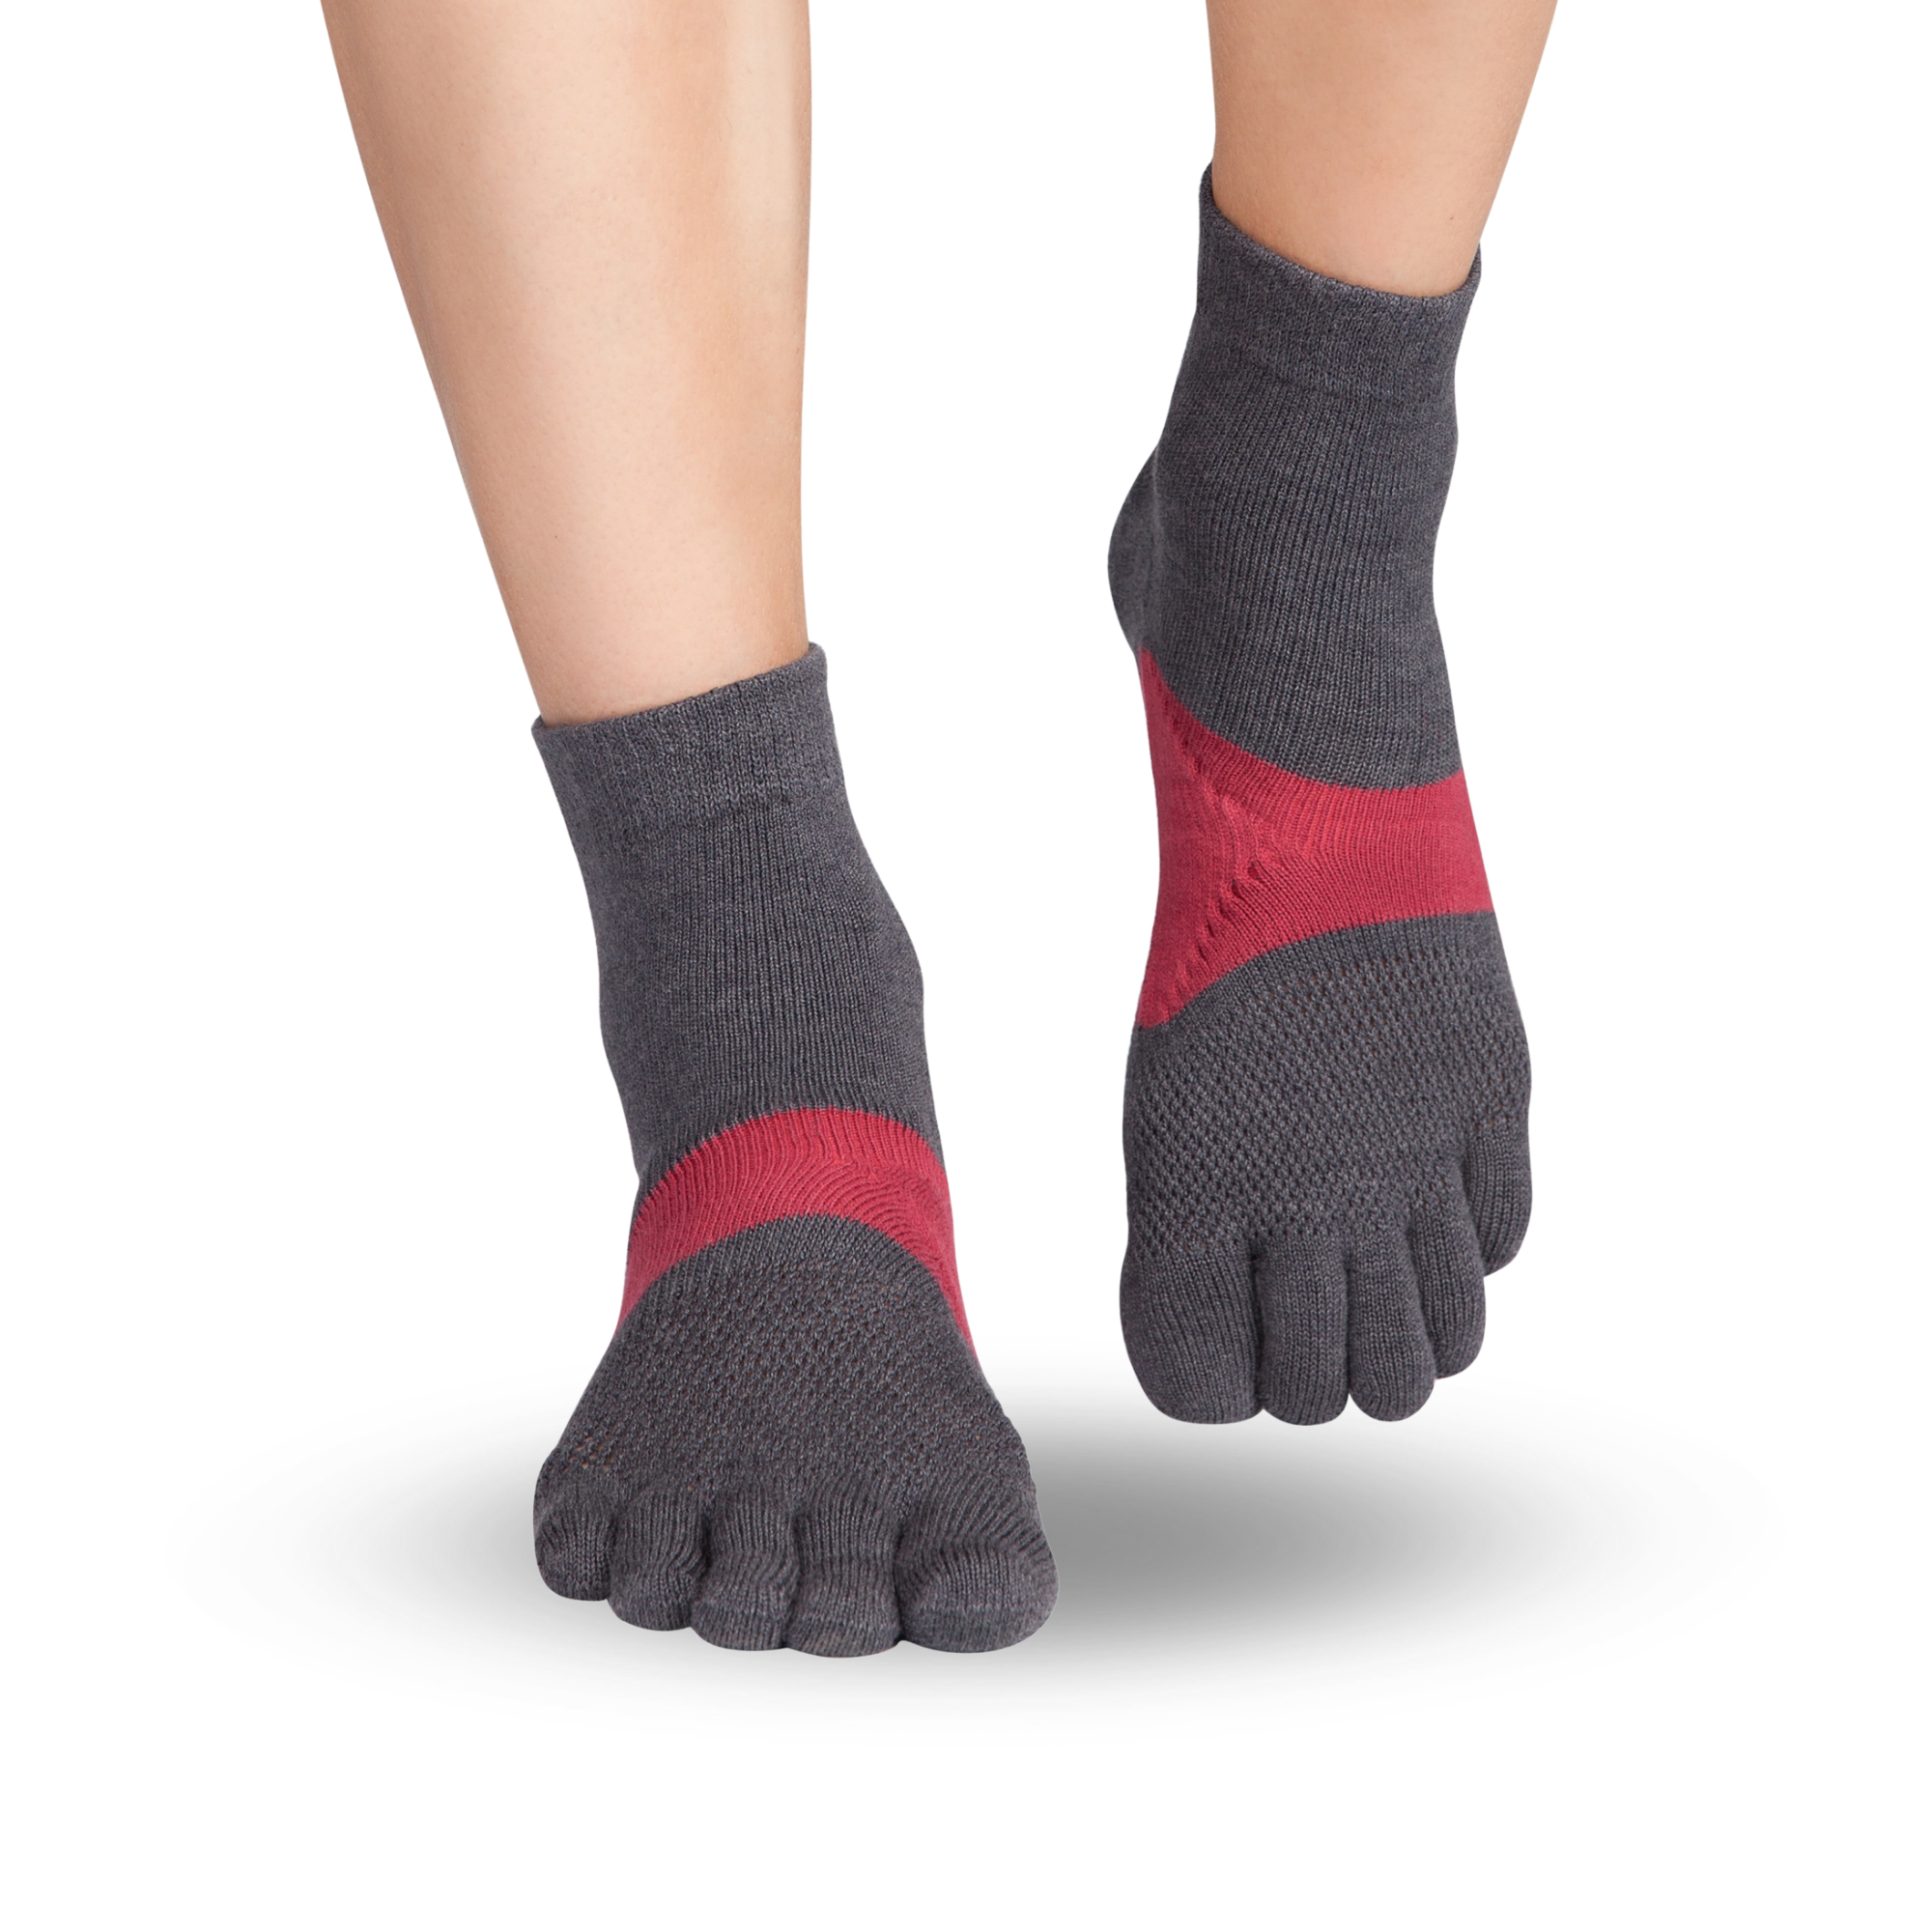 Calcetines de running TS - los calcetines de running imprescindibles de Knitido :gris / rojo carmín